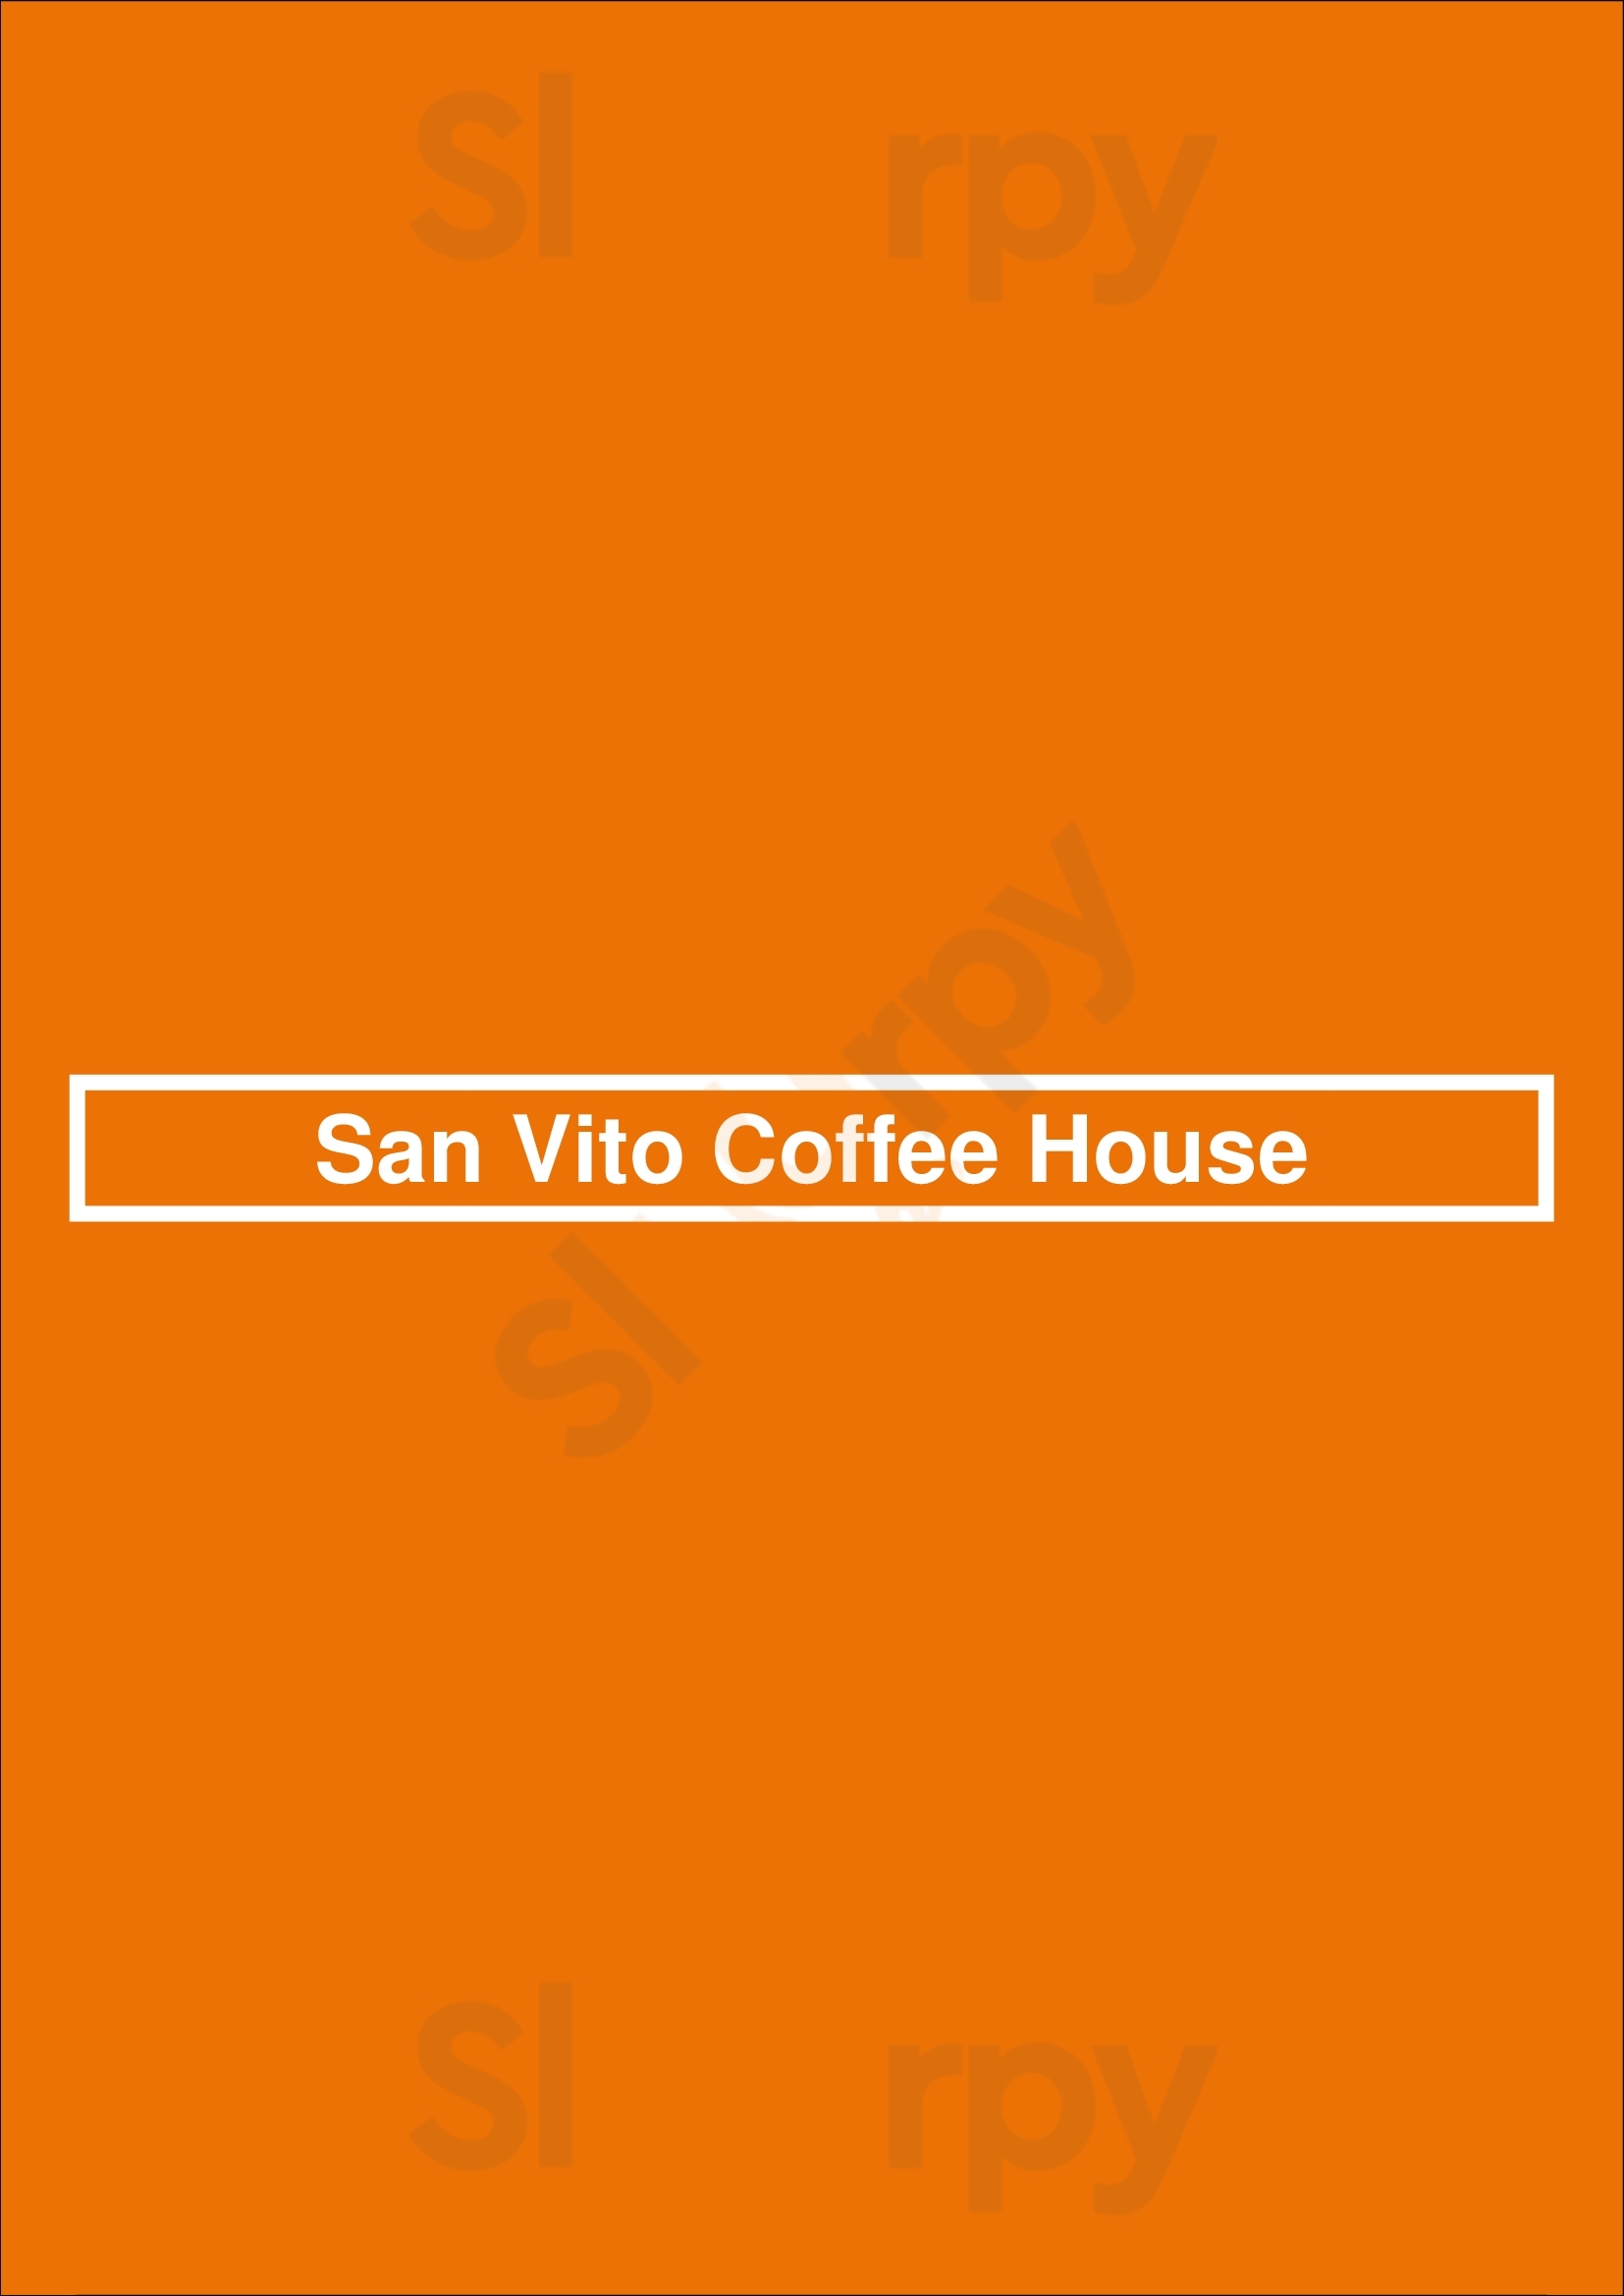 San Vito Coffee House Winnipeg Menu - 1